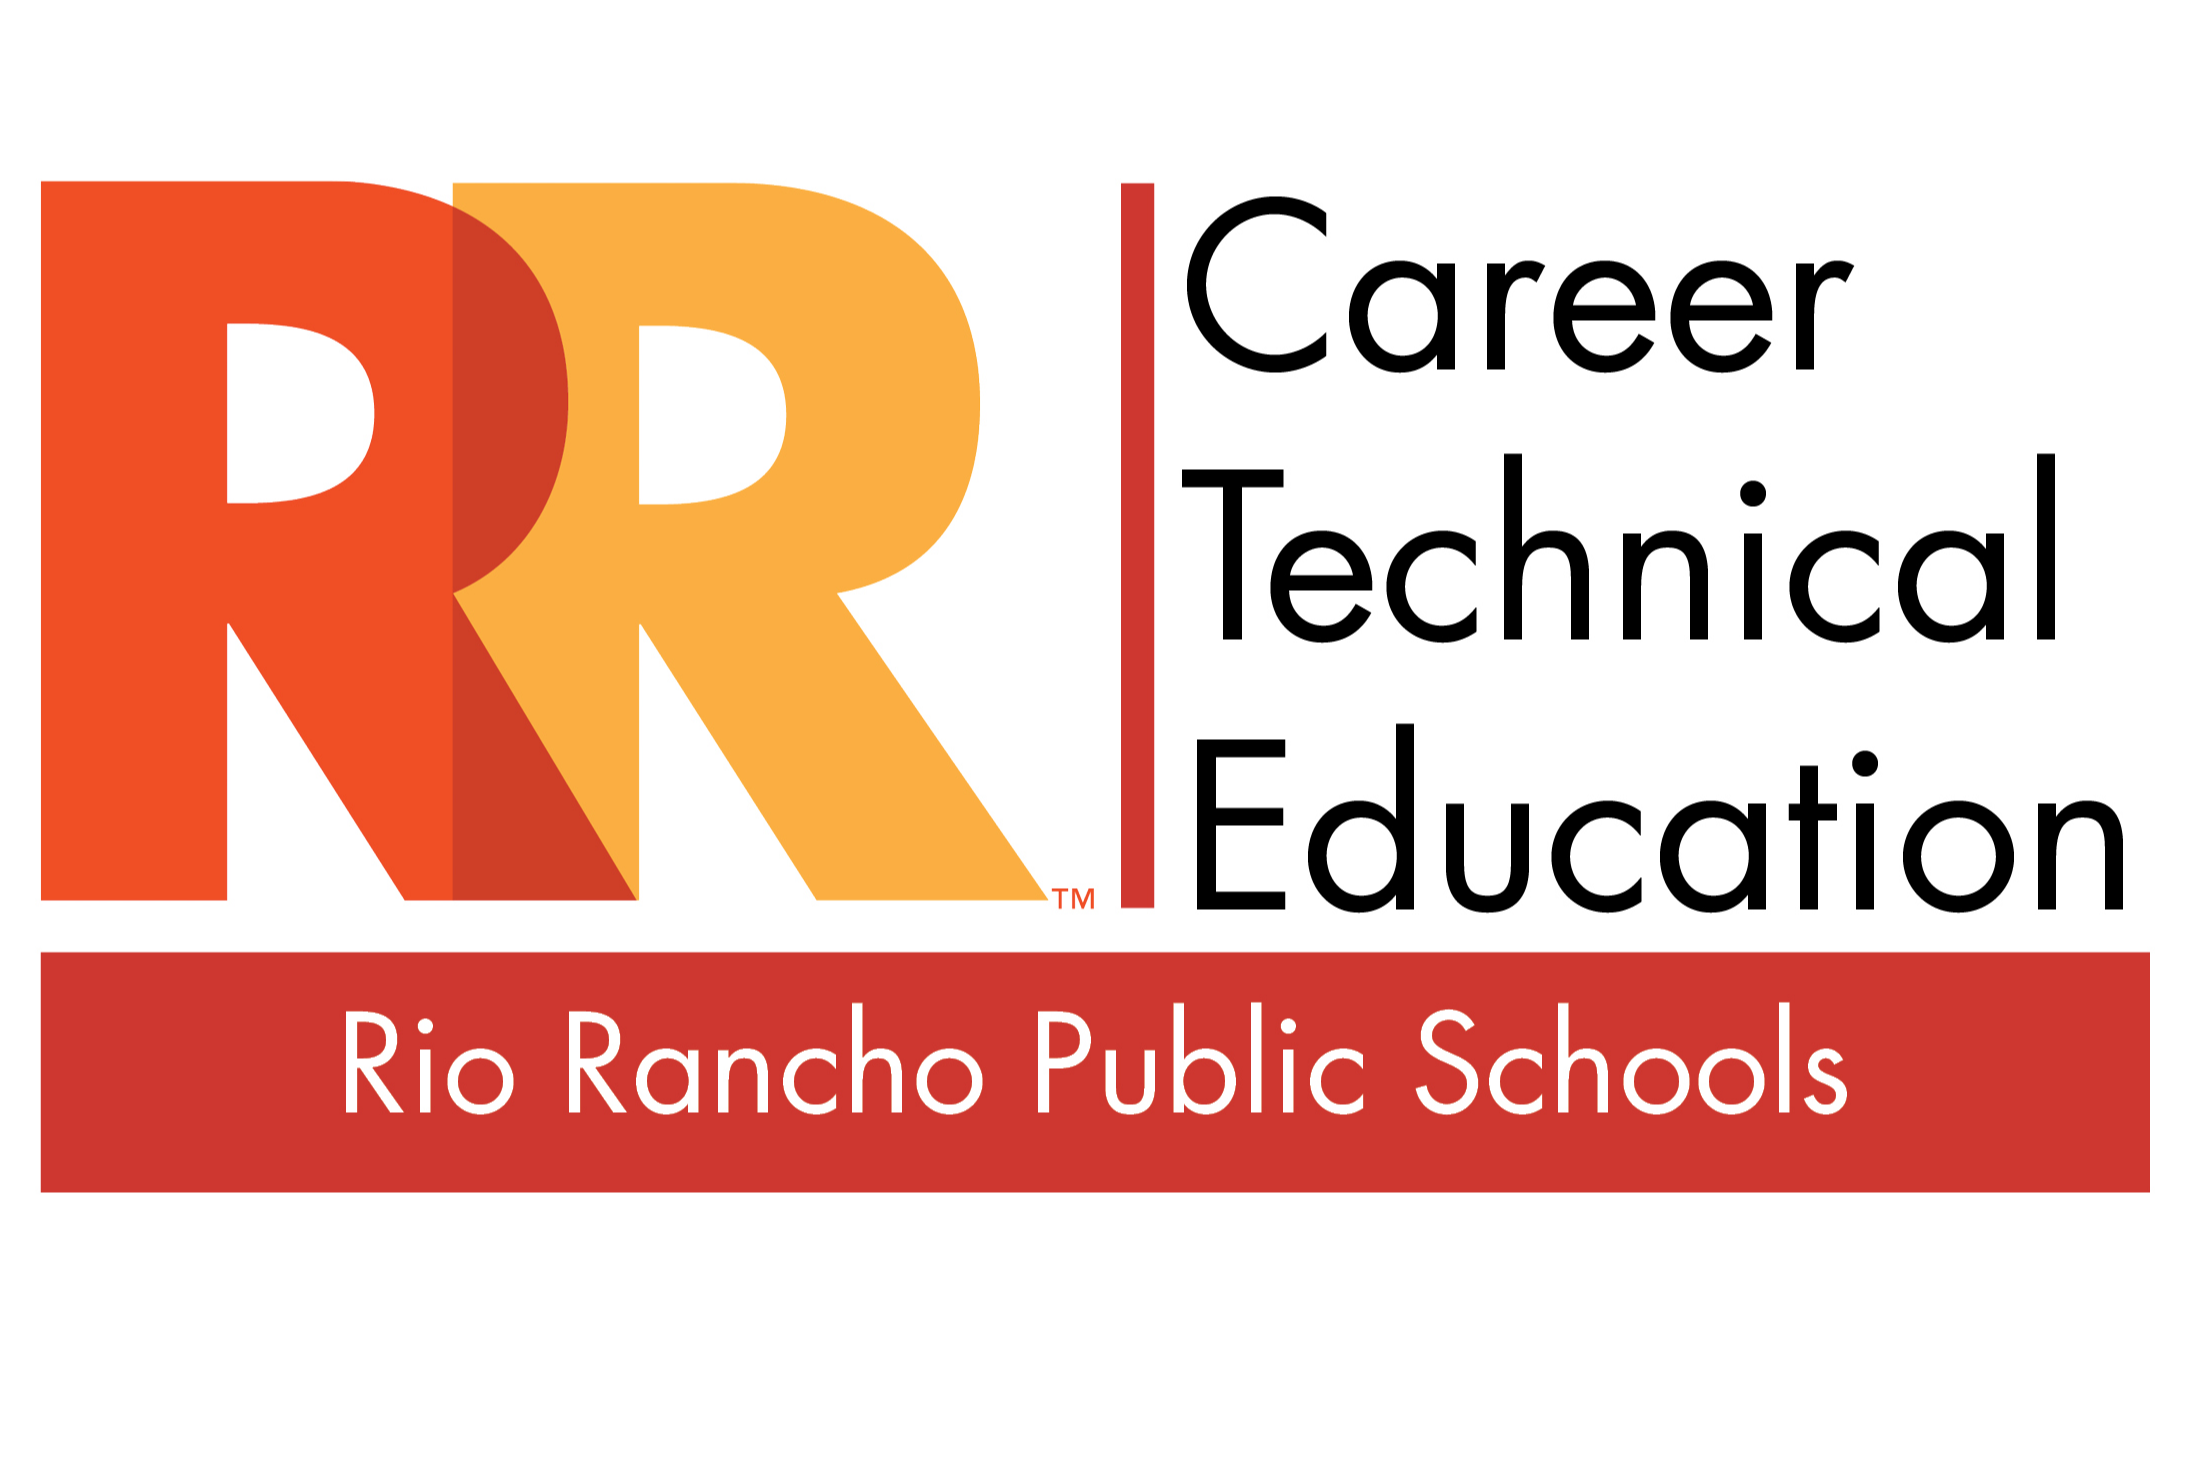 RRPS Career Technical Education Program